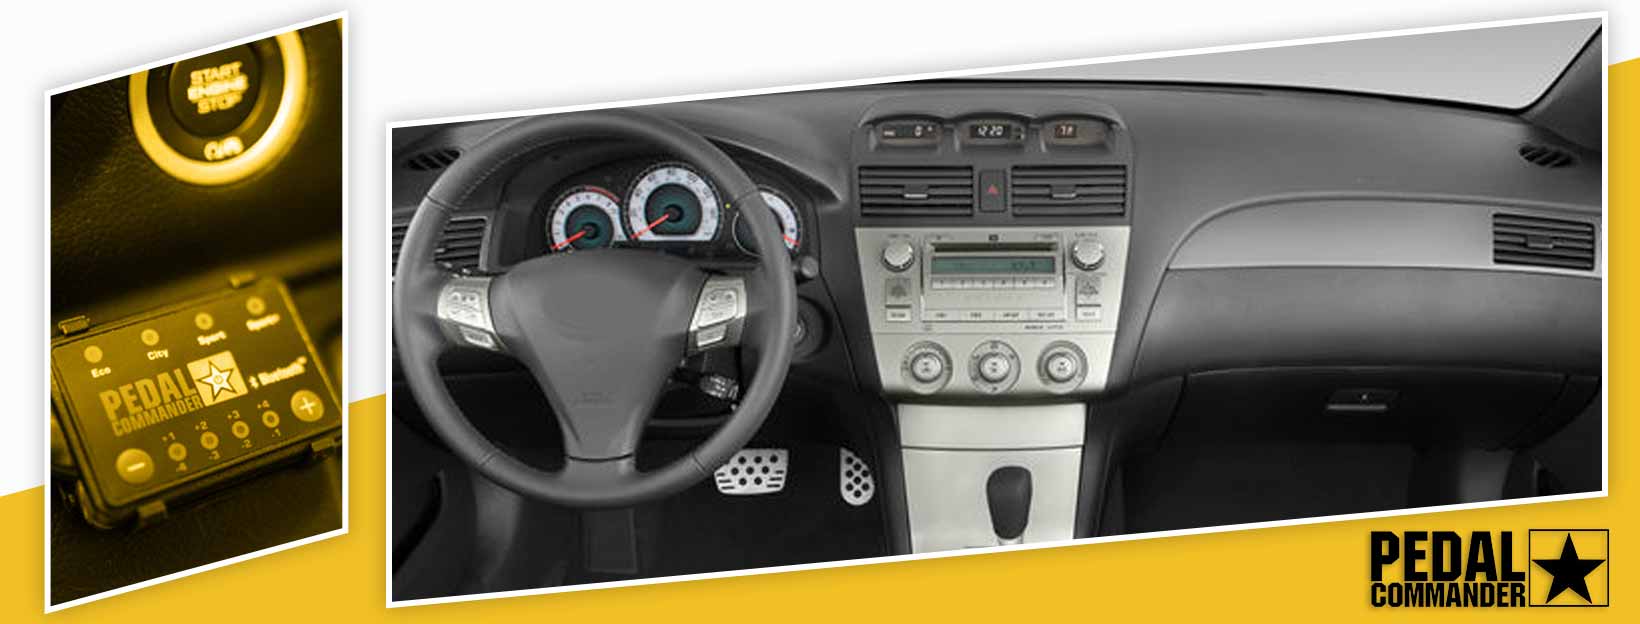 Pedal Commander for Toyota Solara - interior